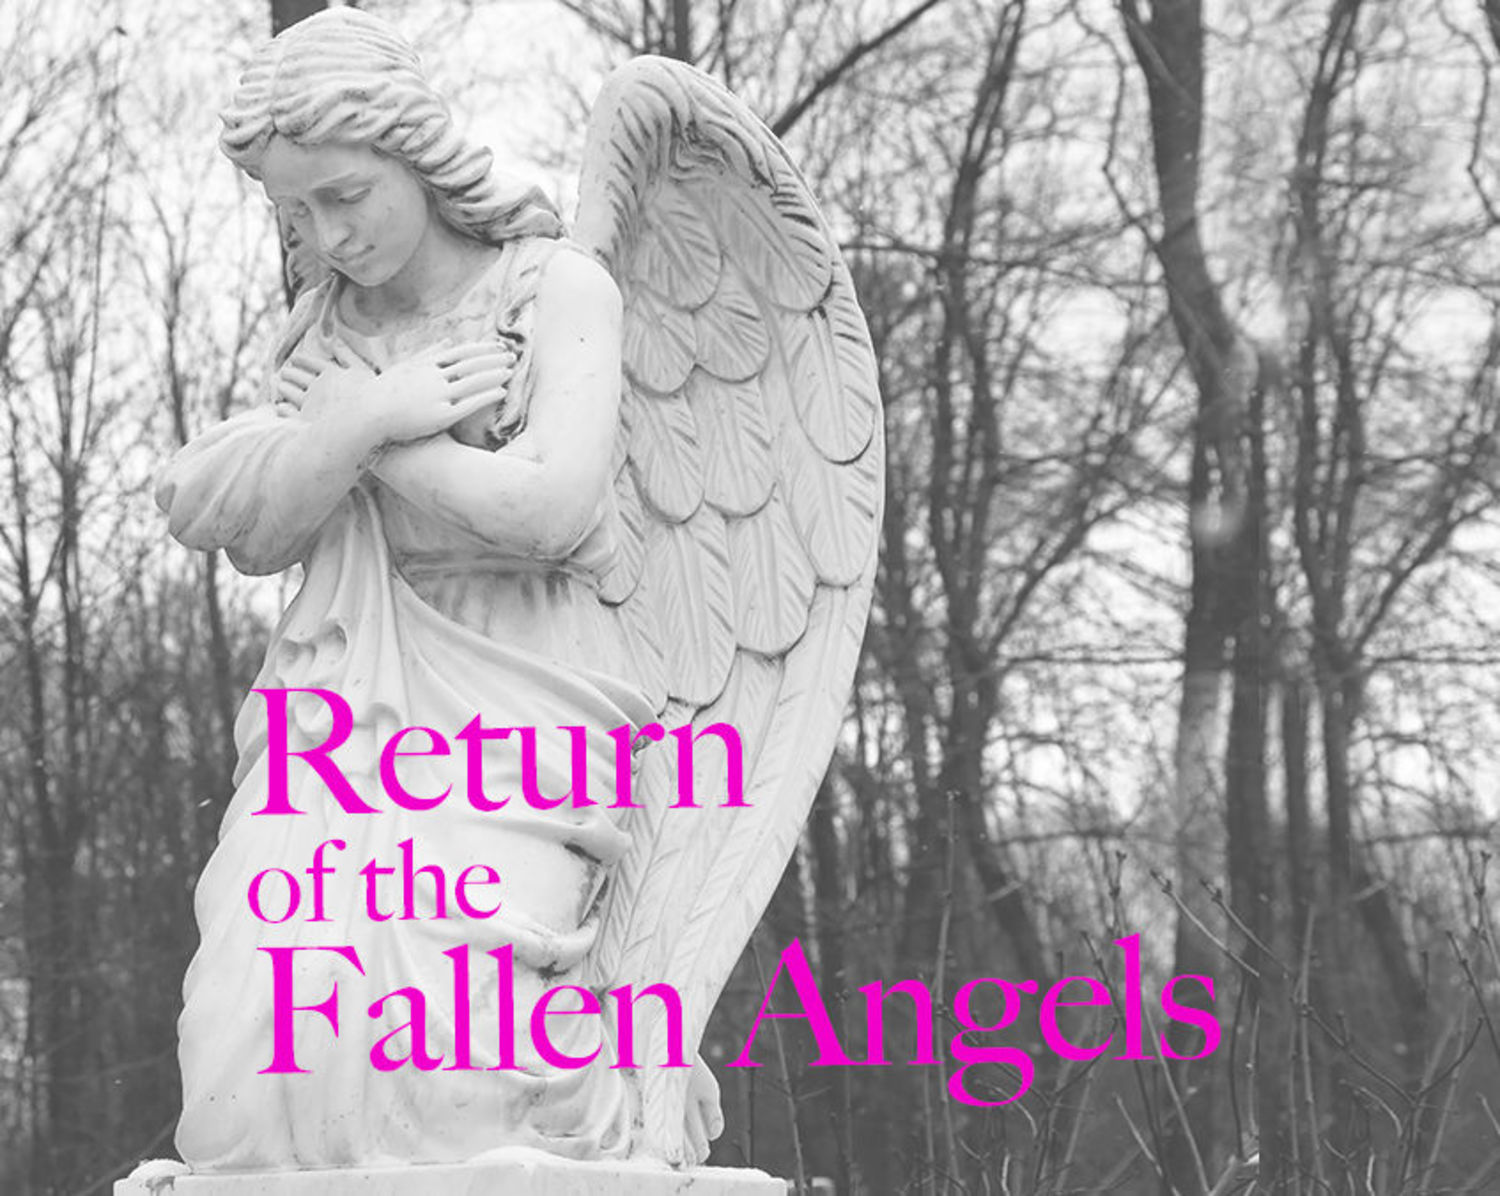 Return of the Fallen Angels